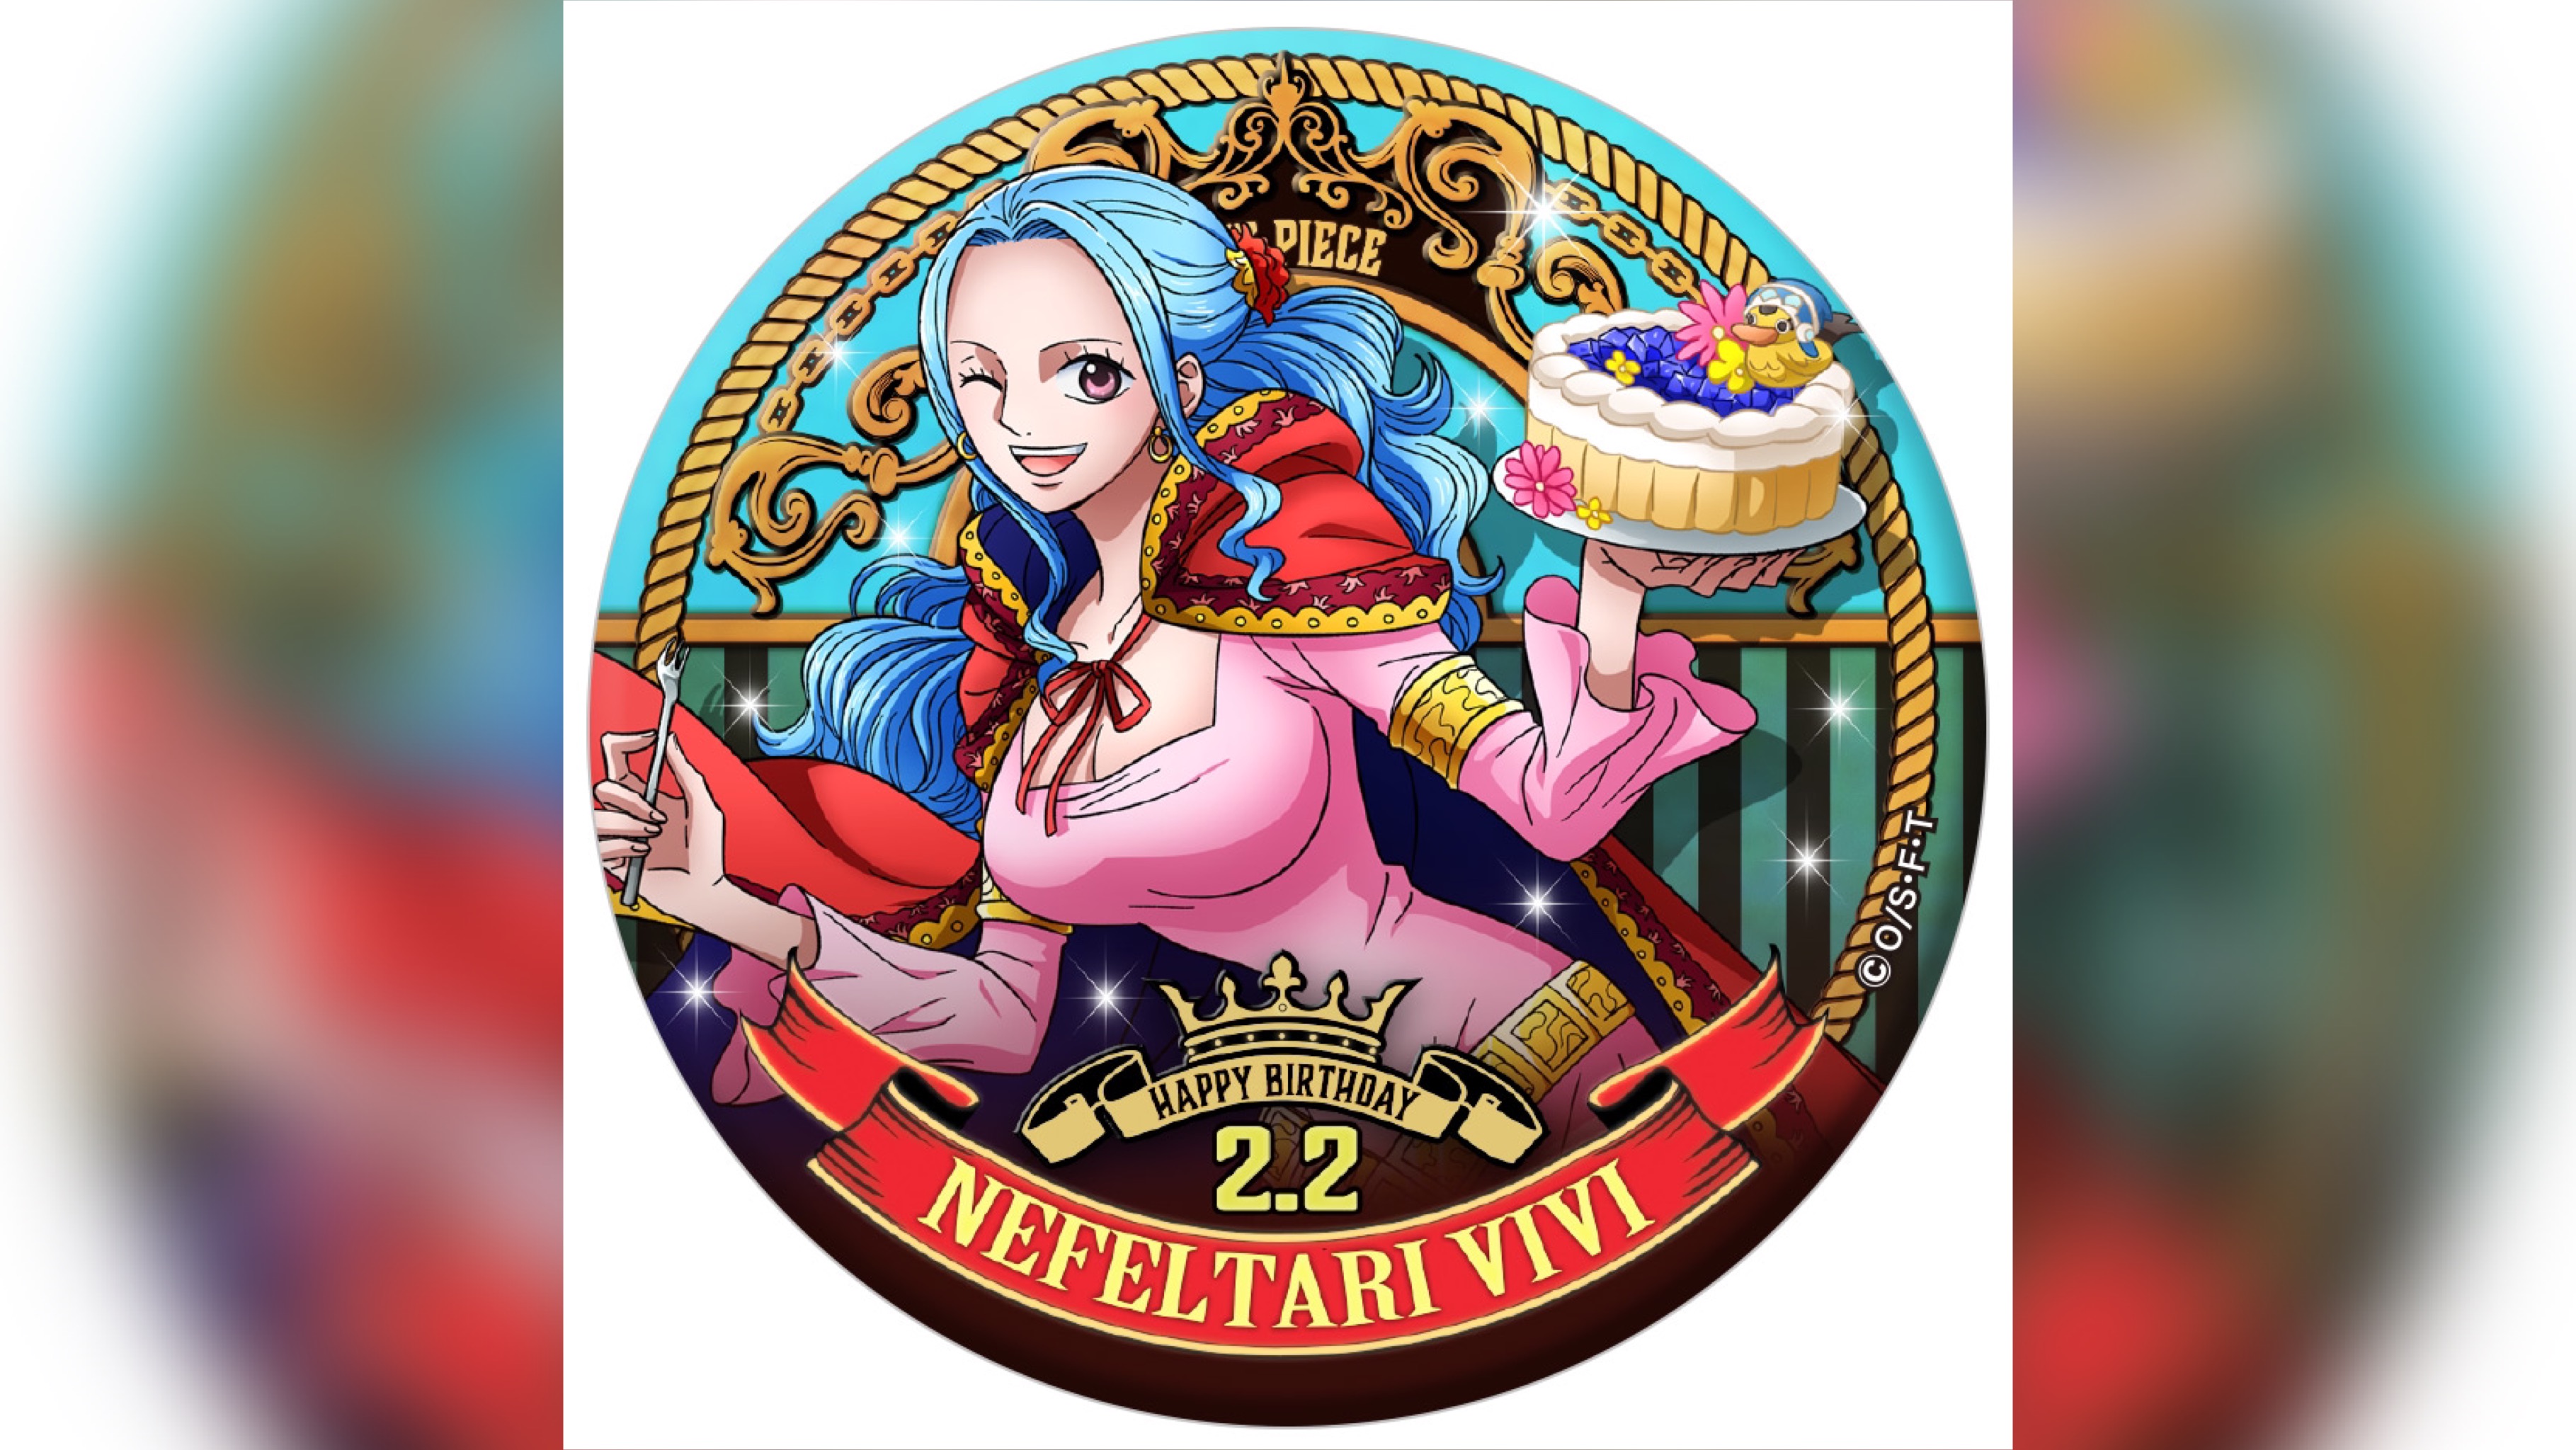 One Piece スタッフ 公式 Official Happy Birthday One Piece Character S February 麦わらストアによるバースデーキャンペーン 2月はビビ ロビンのグッズが登場するぞ 最新情報はこちら T Co 7hrwpafdlh Onepiece ワンピース